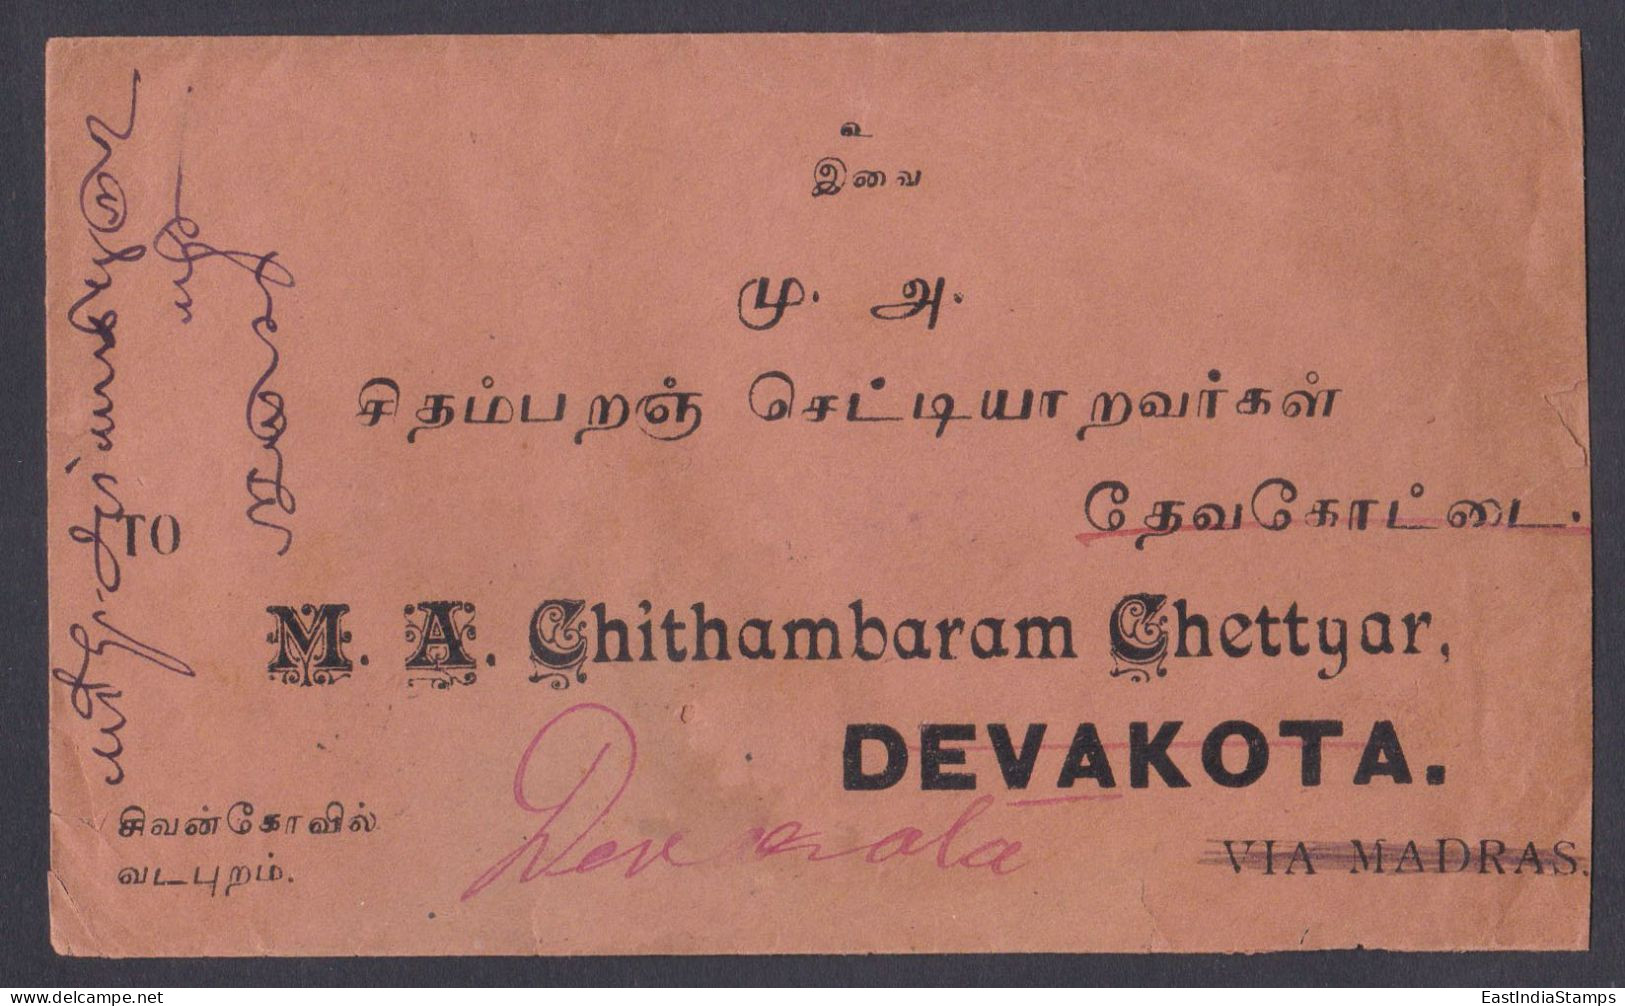 Sri Lanka Ceylon 1912 Used Cover To India, King George V - Sri Lanka (Ceylan) (1948-...)